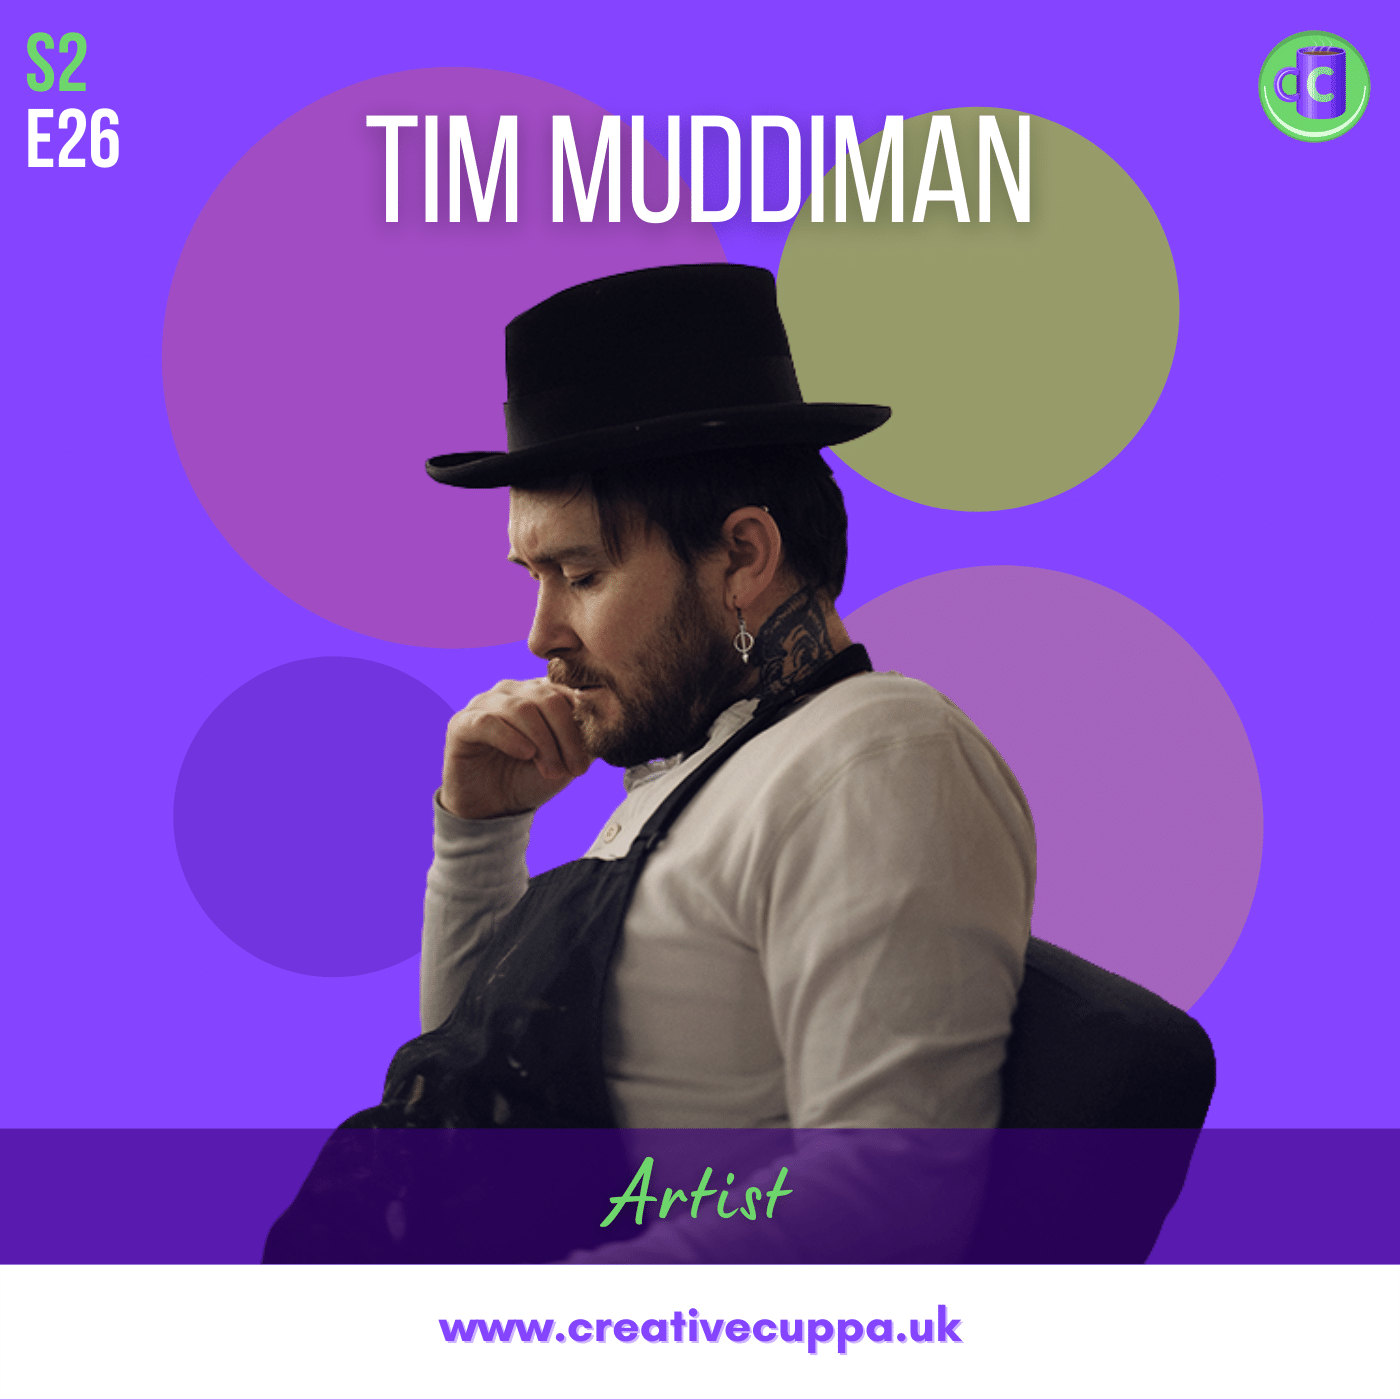 Tim Muddiman: artist